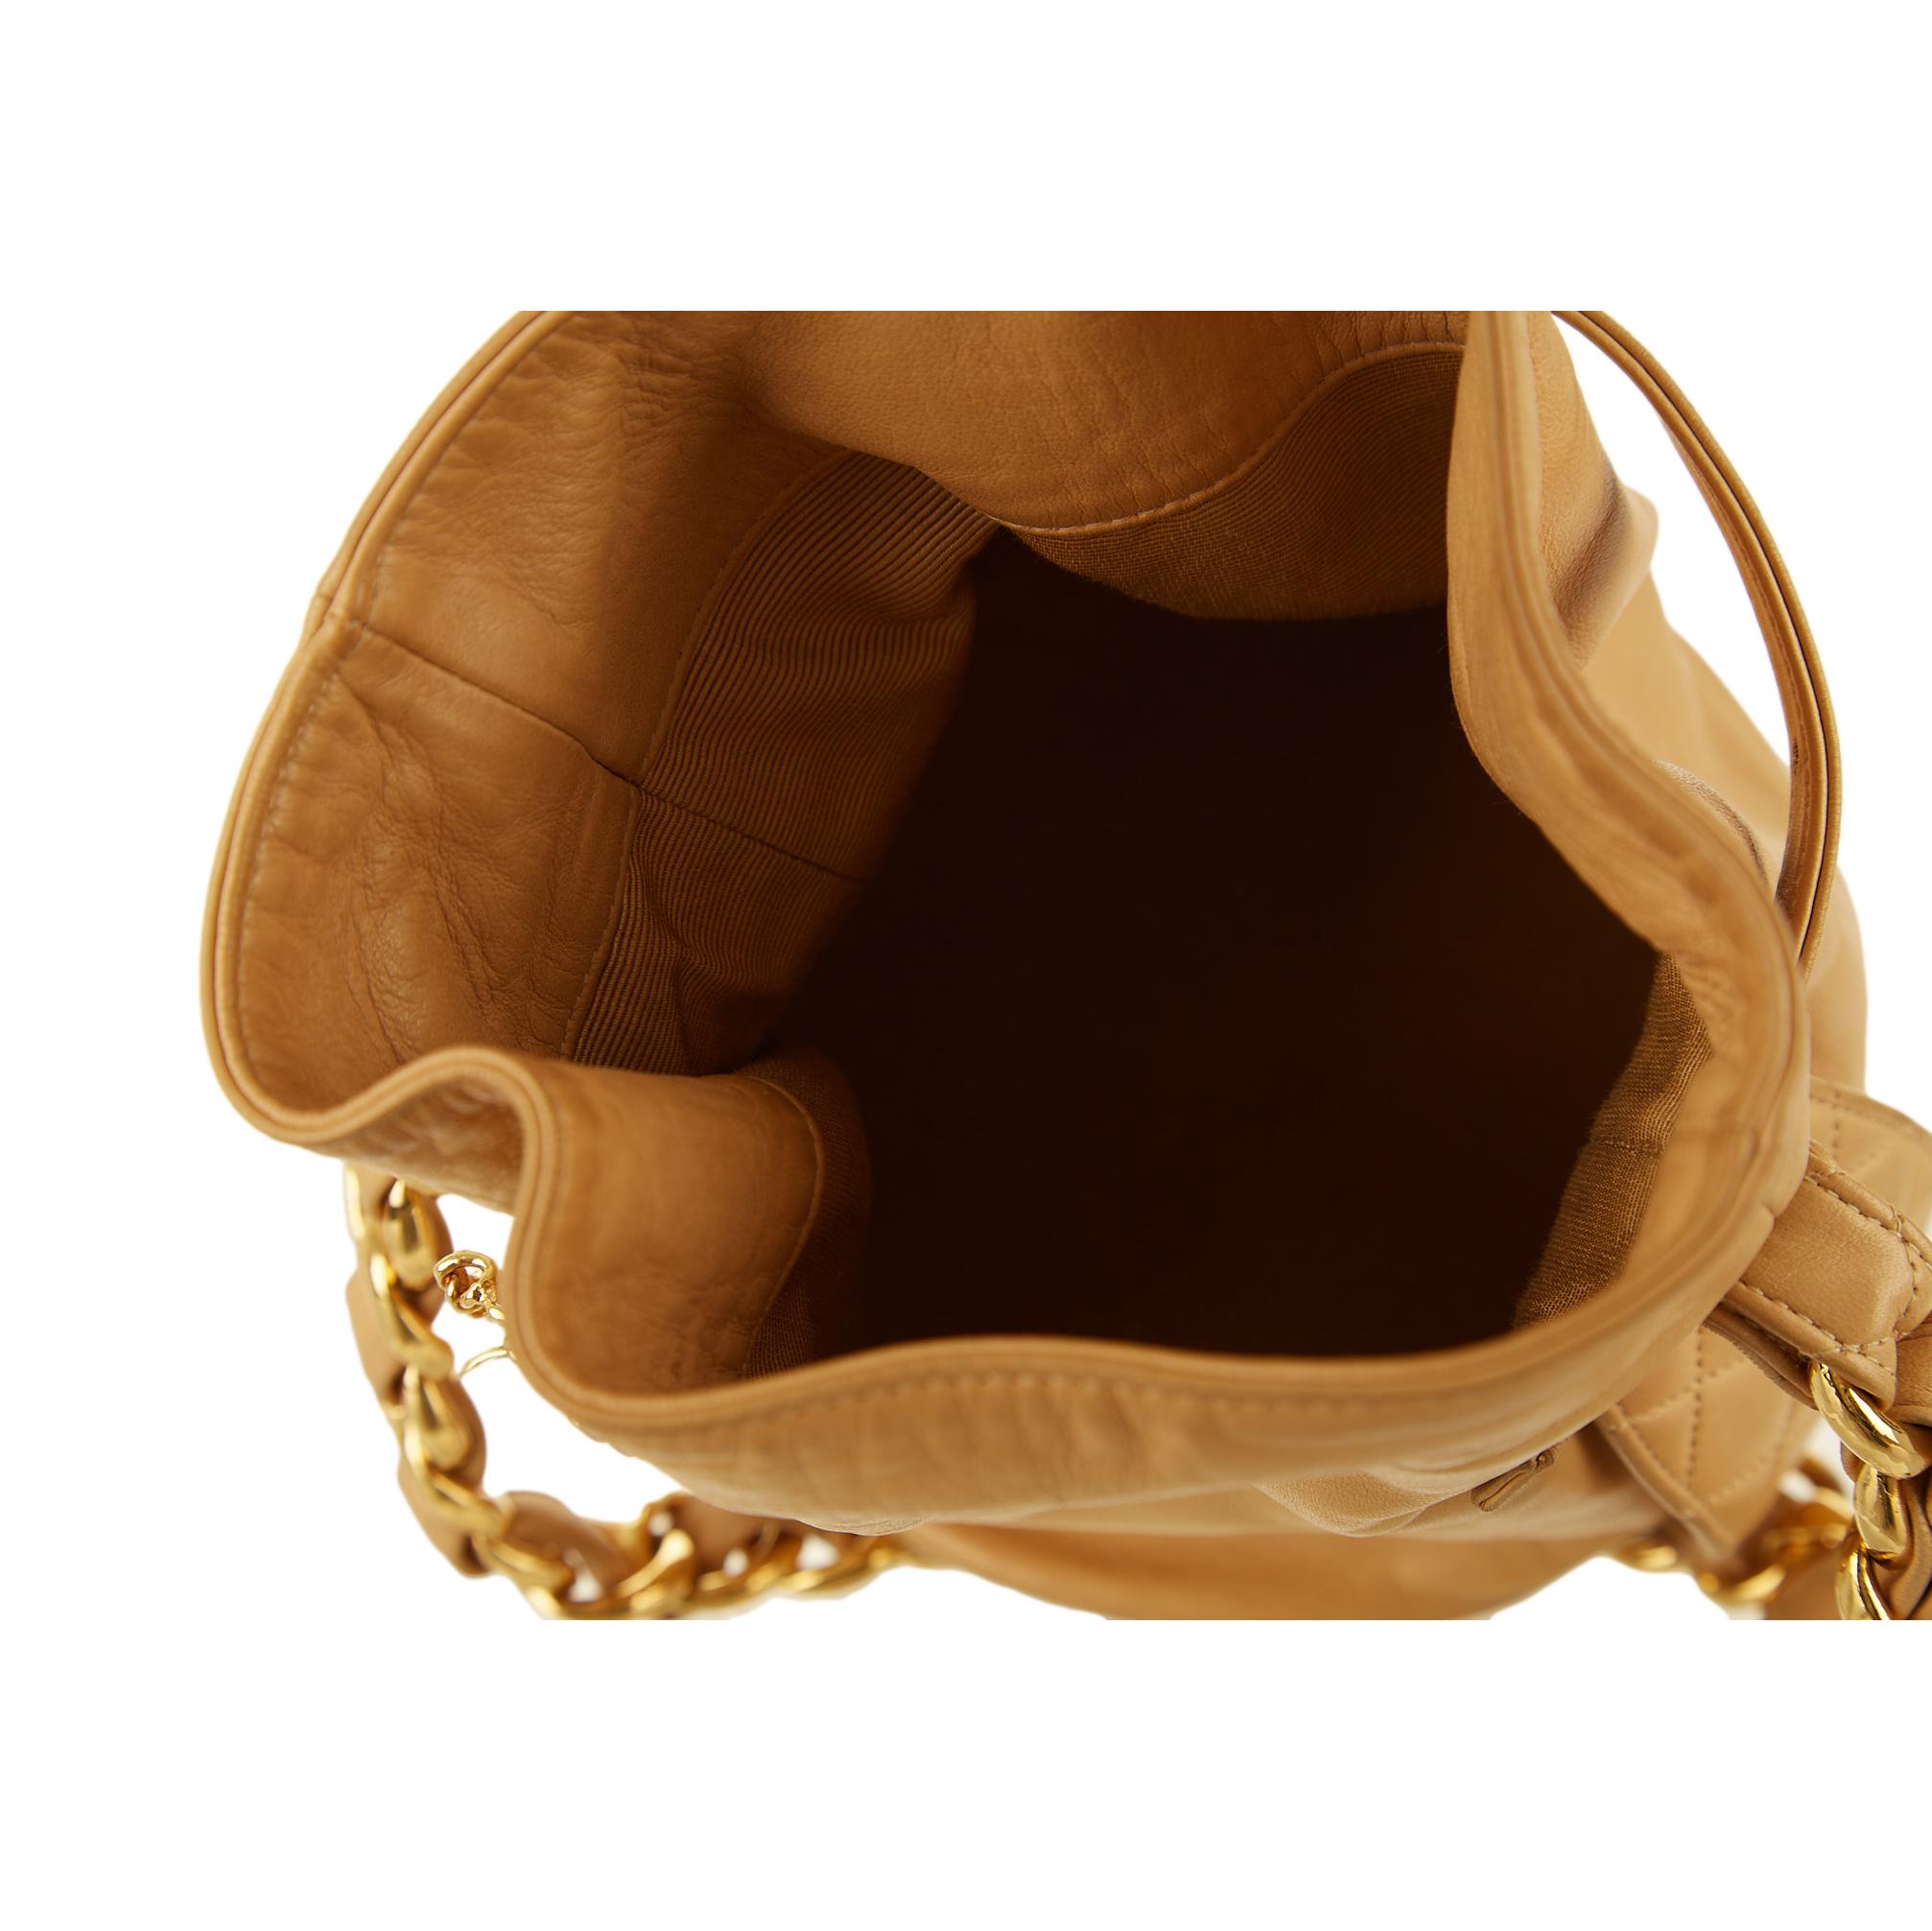 Chanel Authenticated Cambon Reporter Handbag